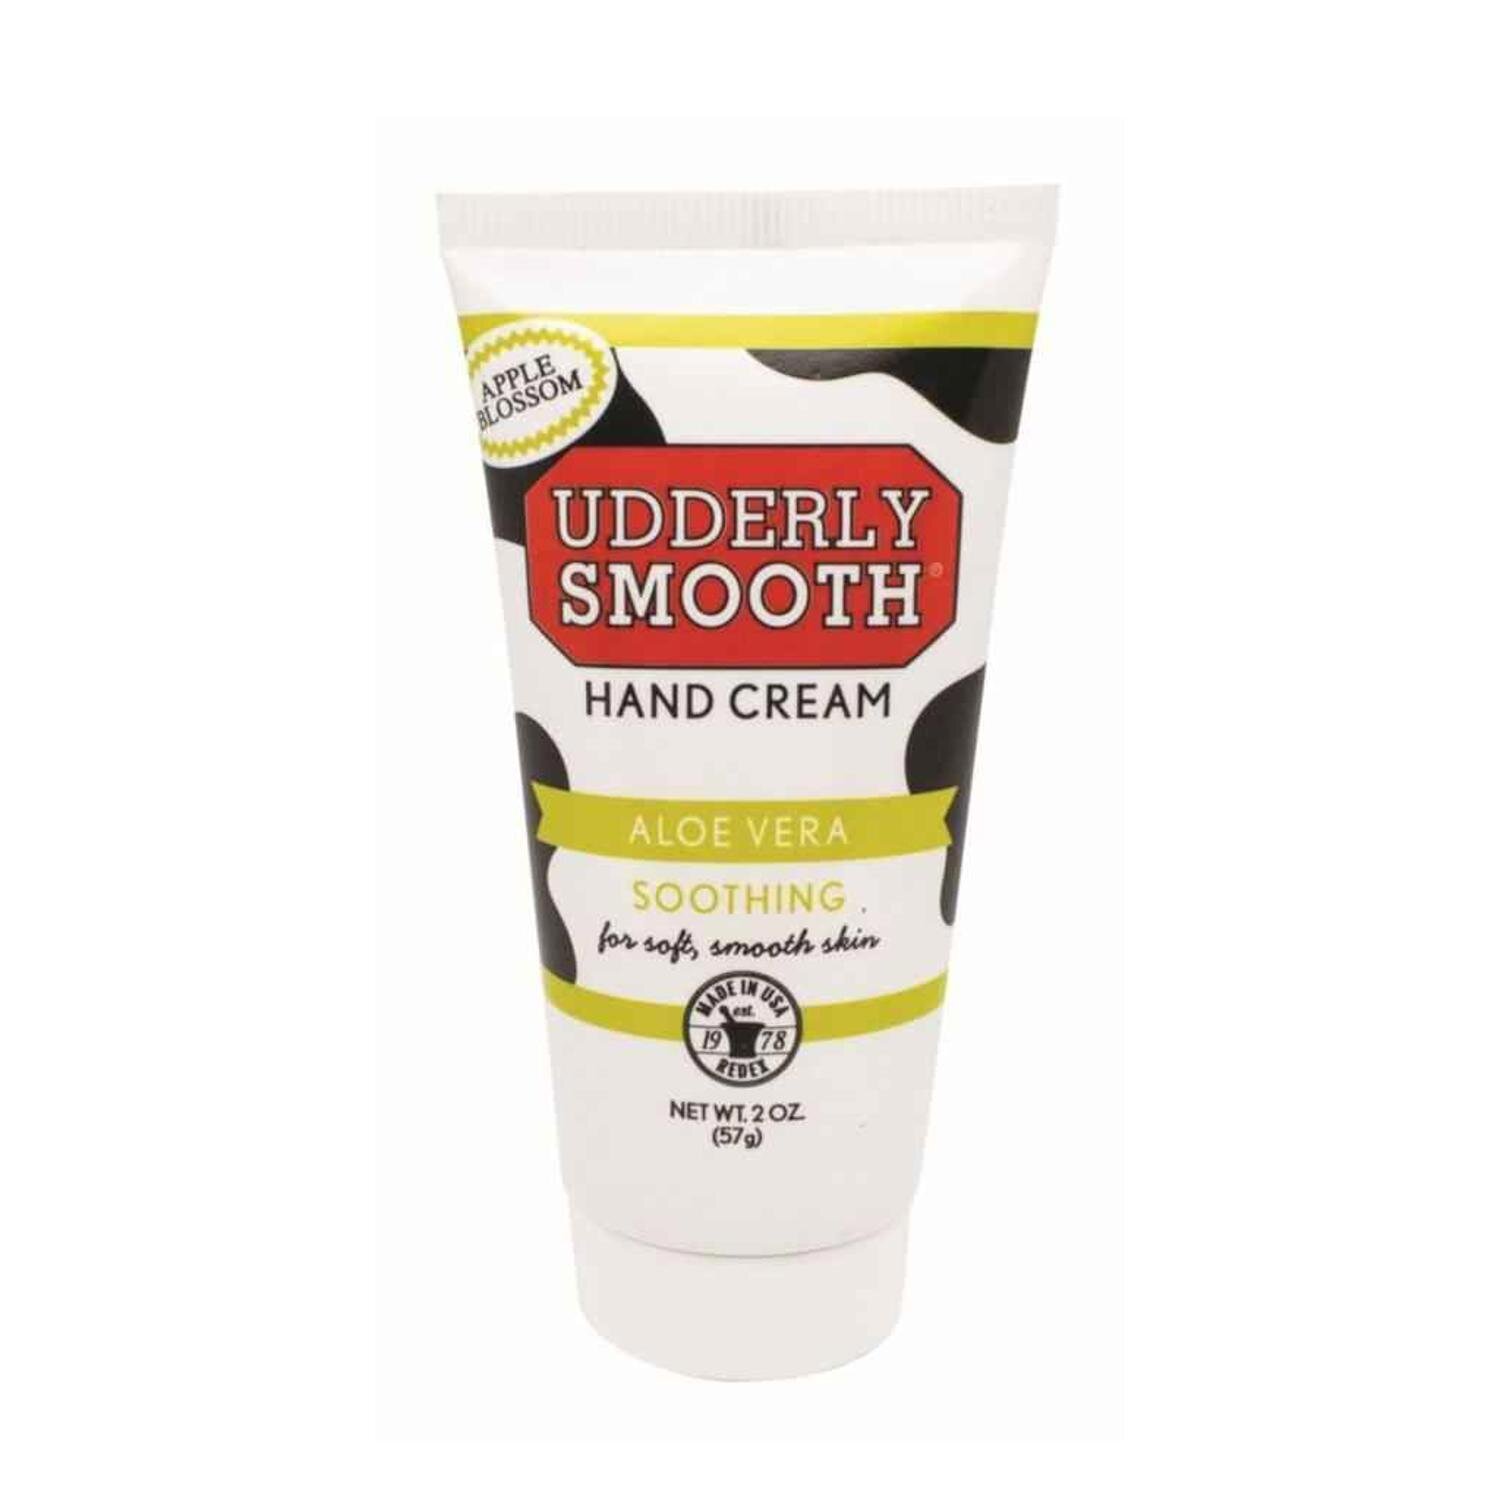 Udderly Smooth Hand Cream with Aloe Vera (2oz) Fixed Size